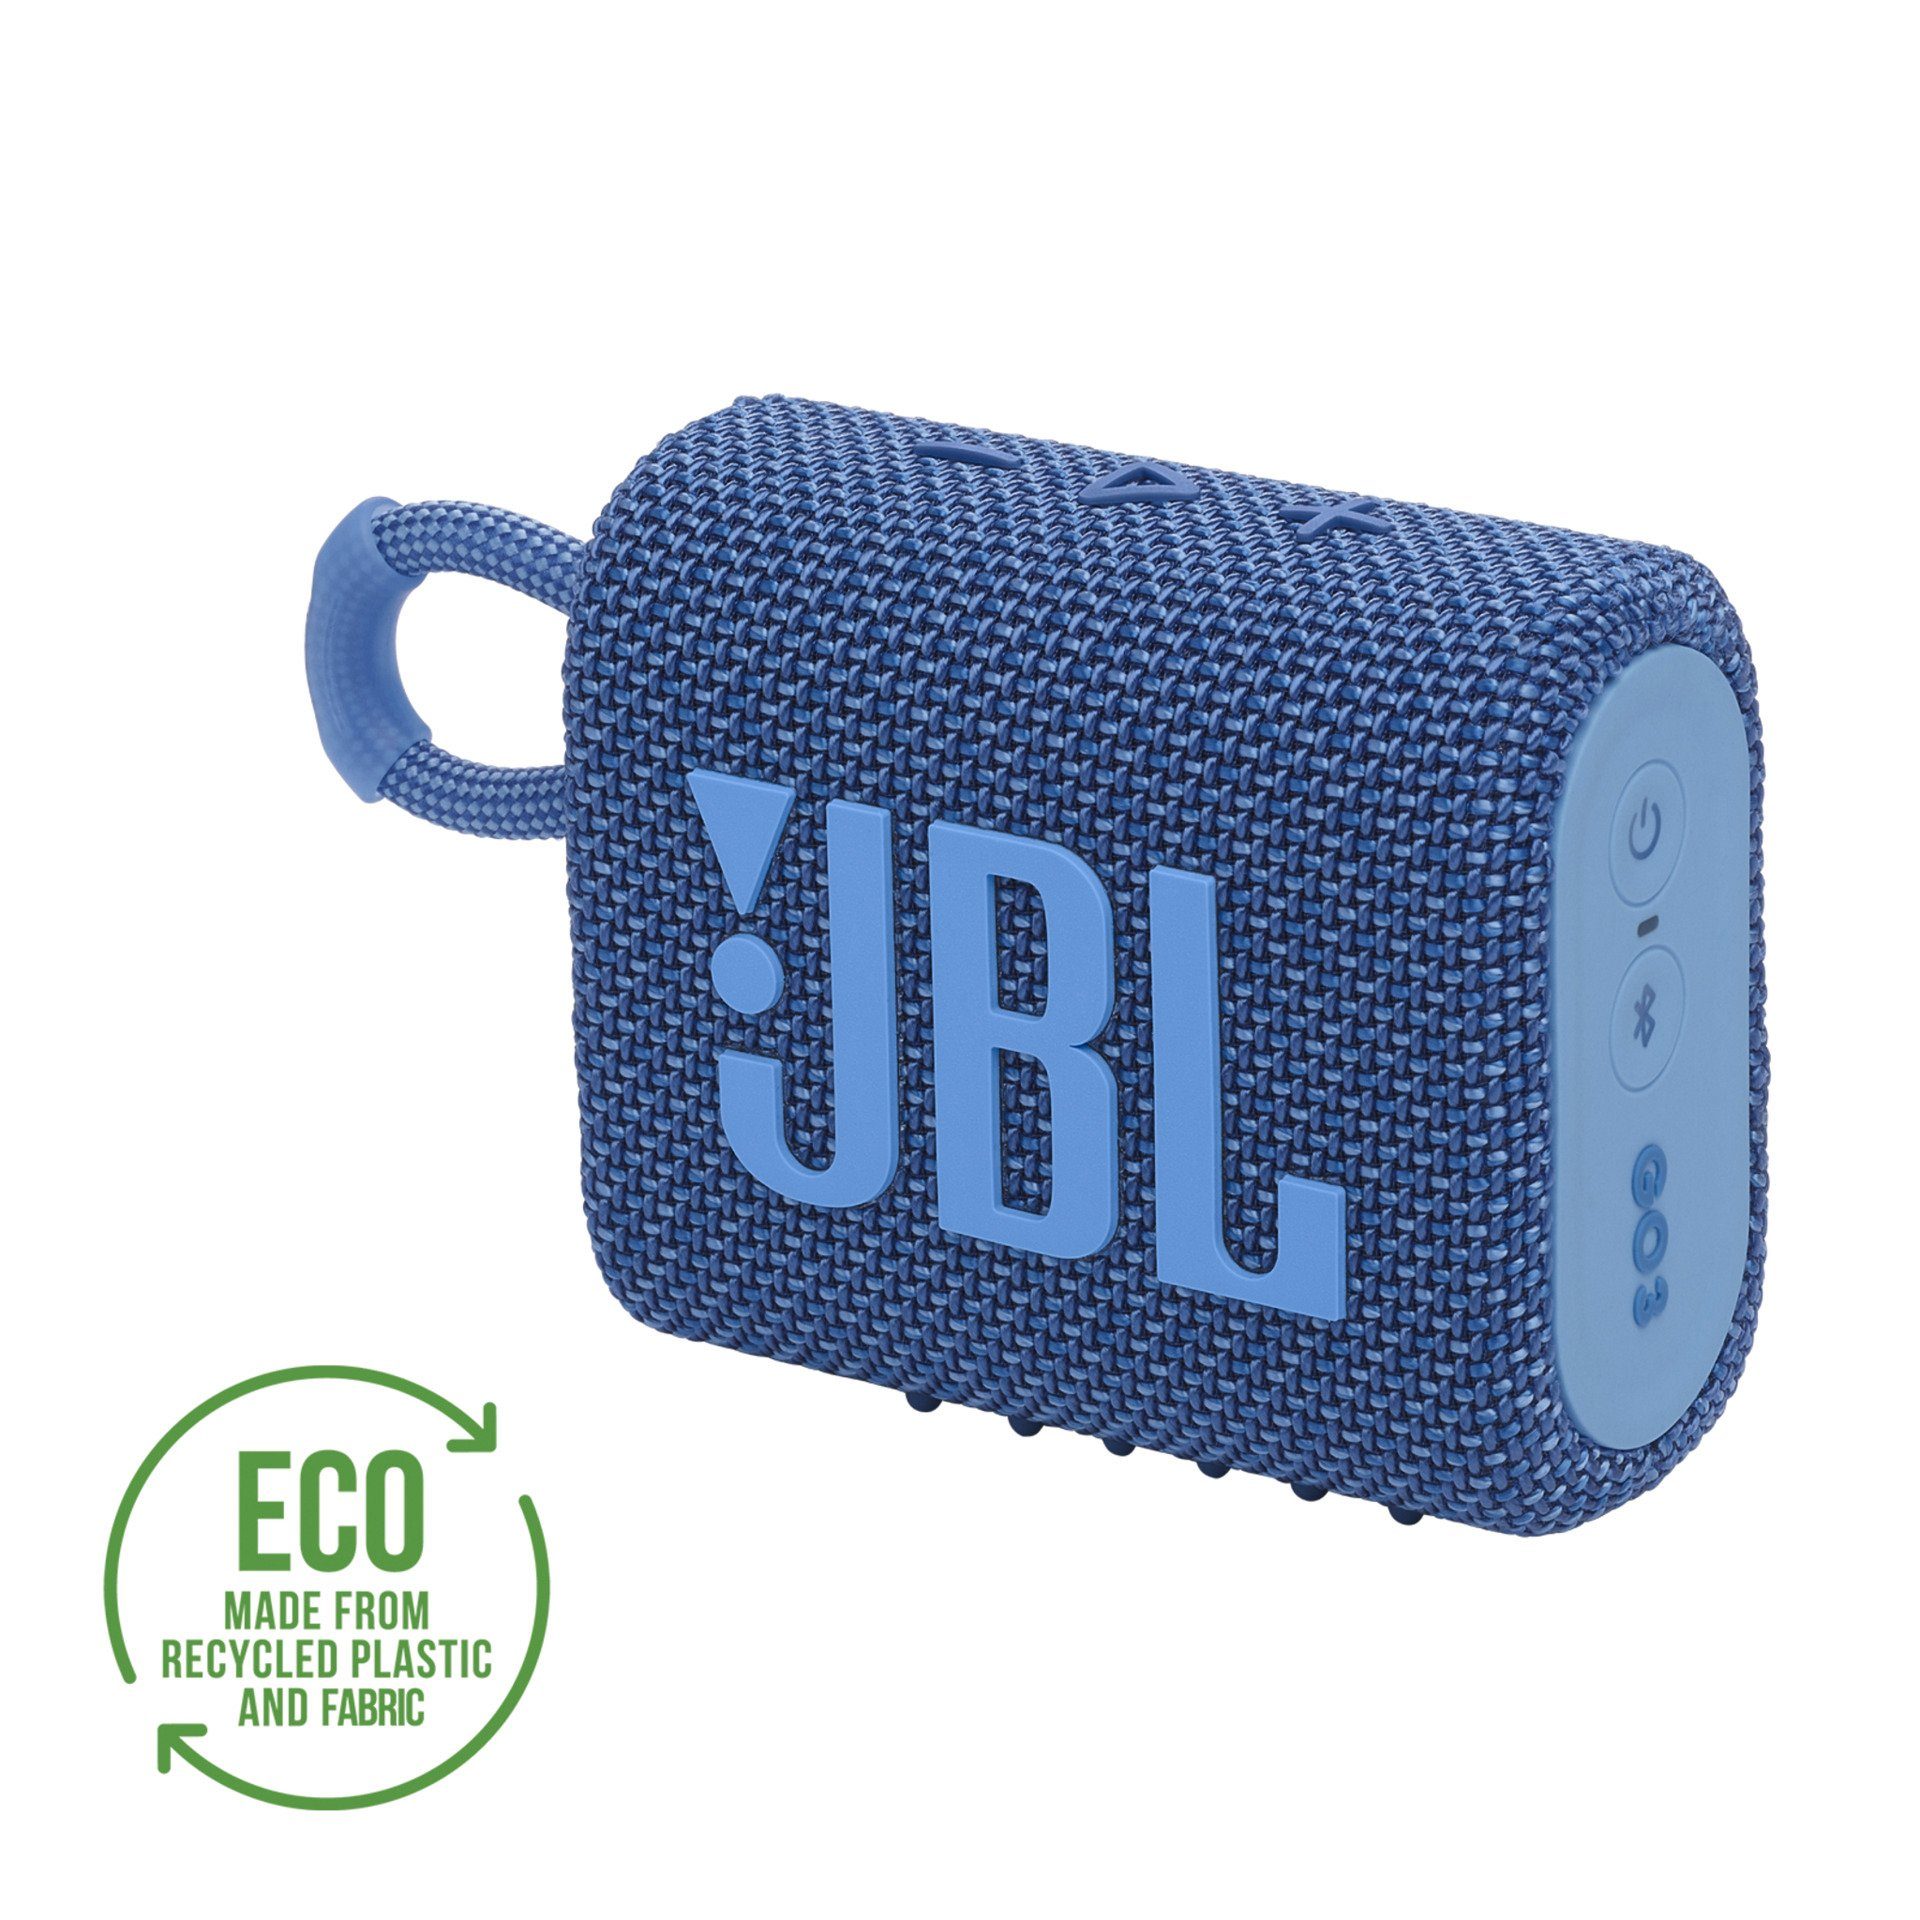 (A2DP Bluetooth, Blau GO Bluetooth-Lautsprecher ECO JBL 4,2 3 W)